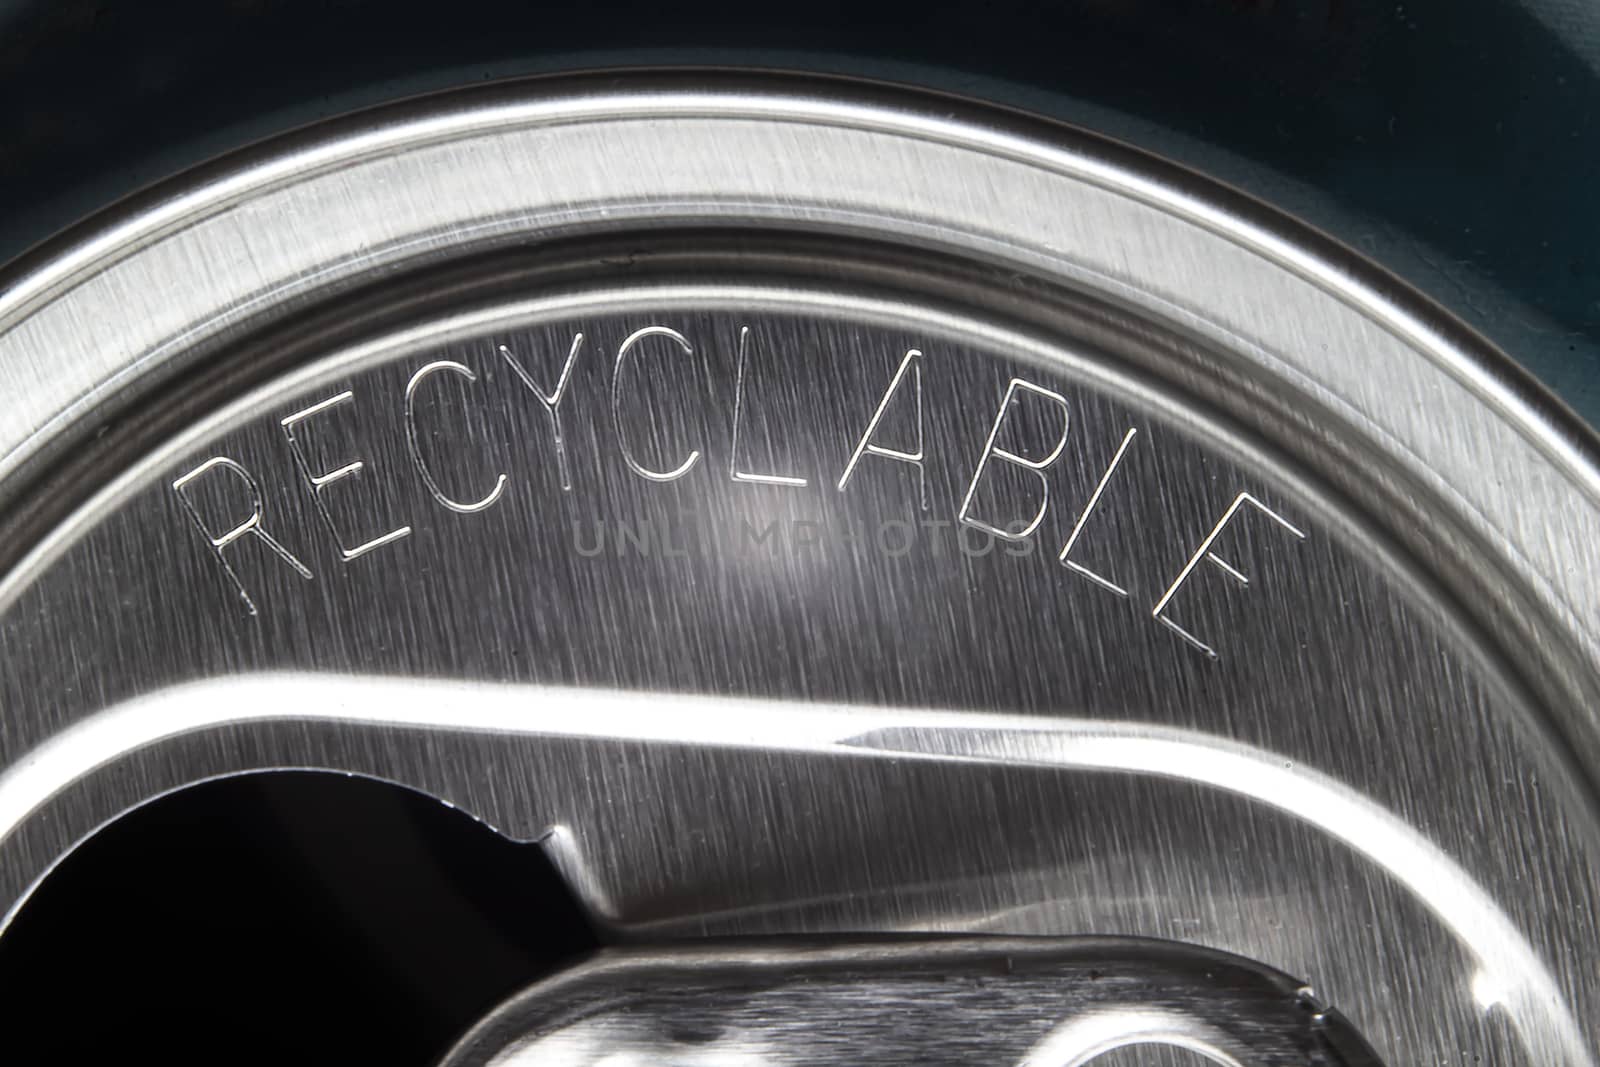 A close up of a open aluminium can